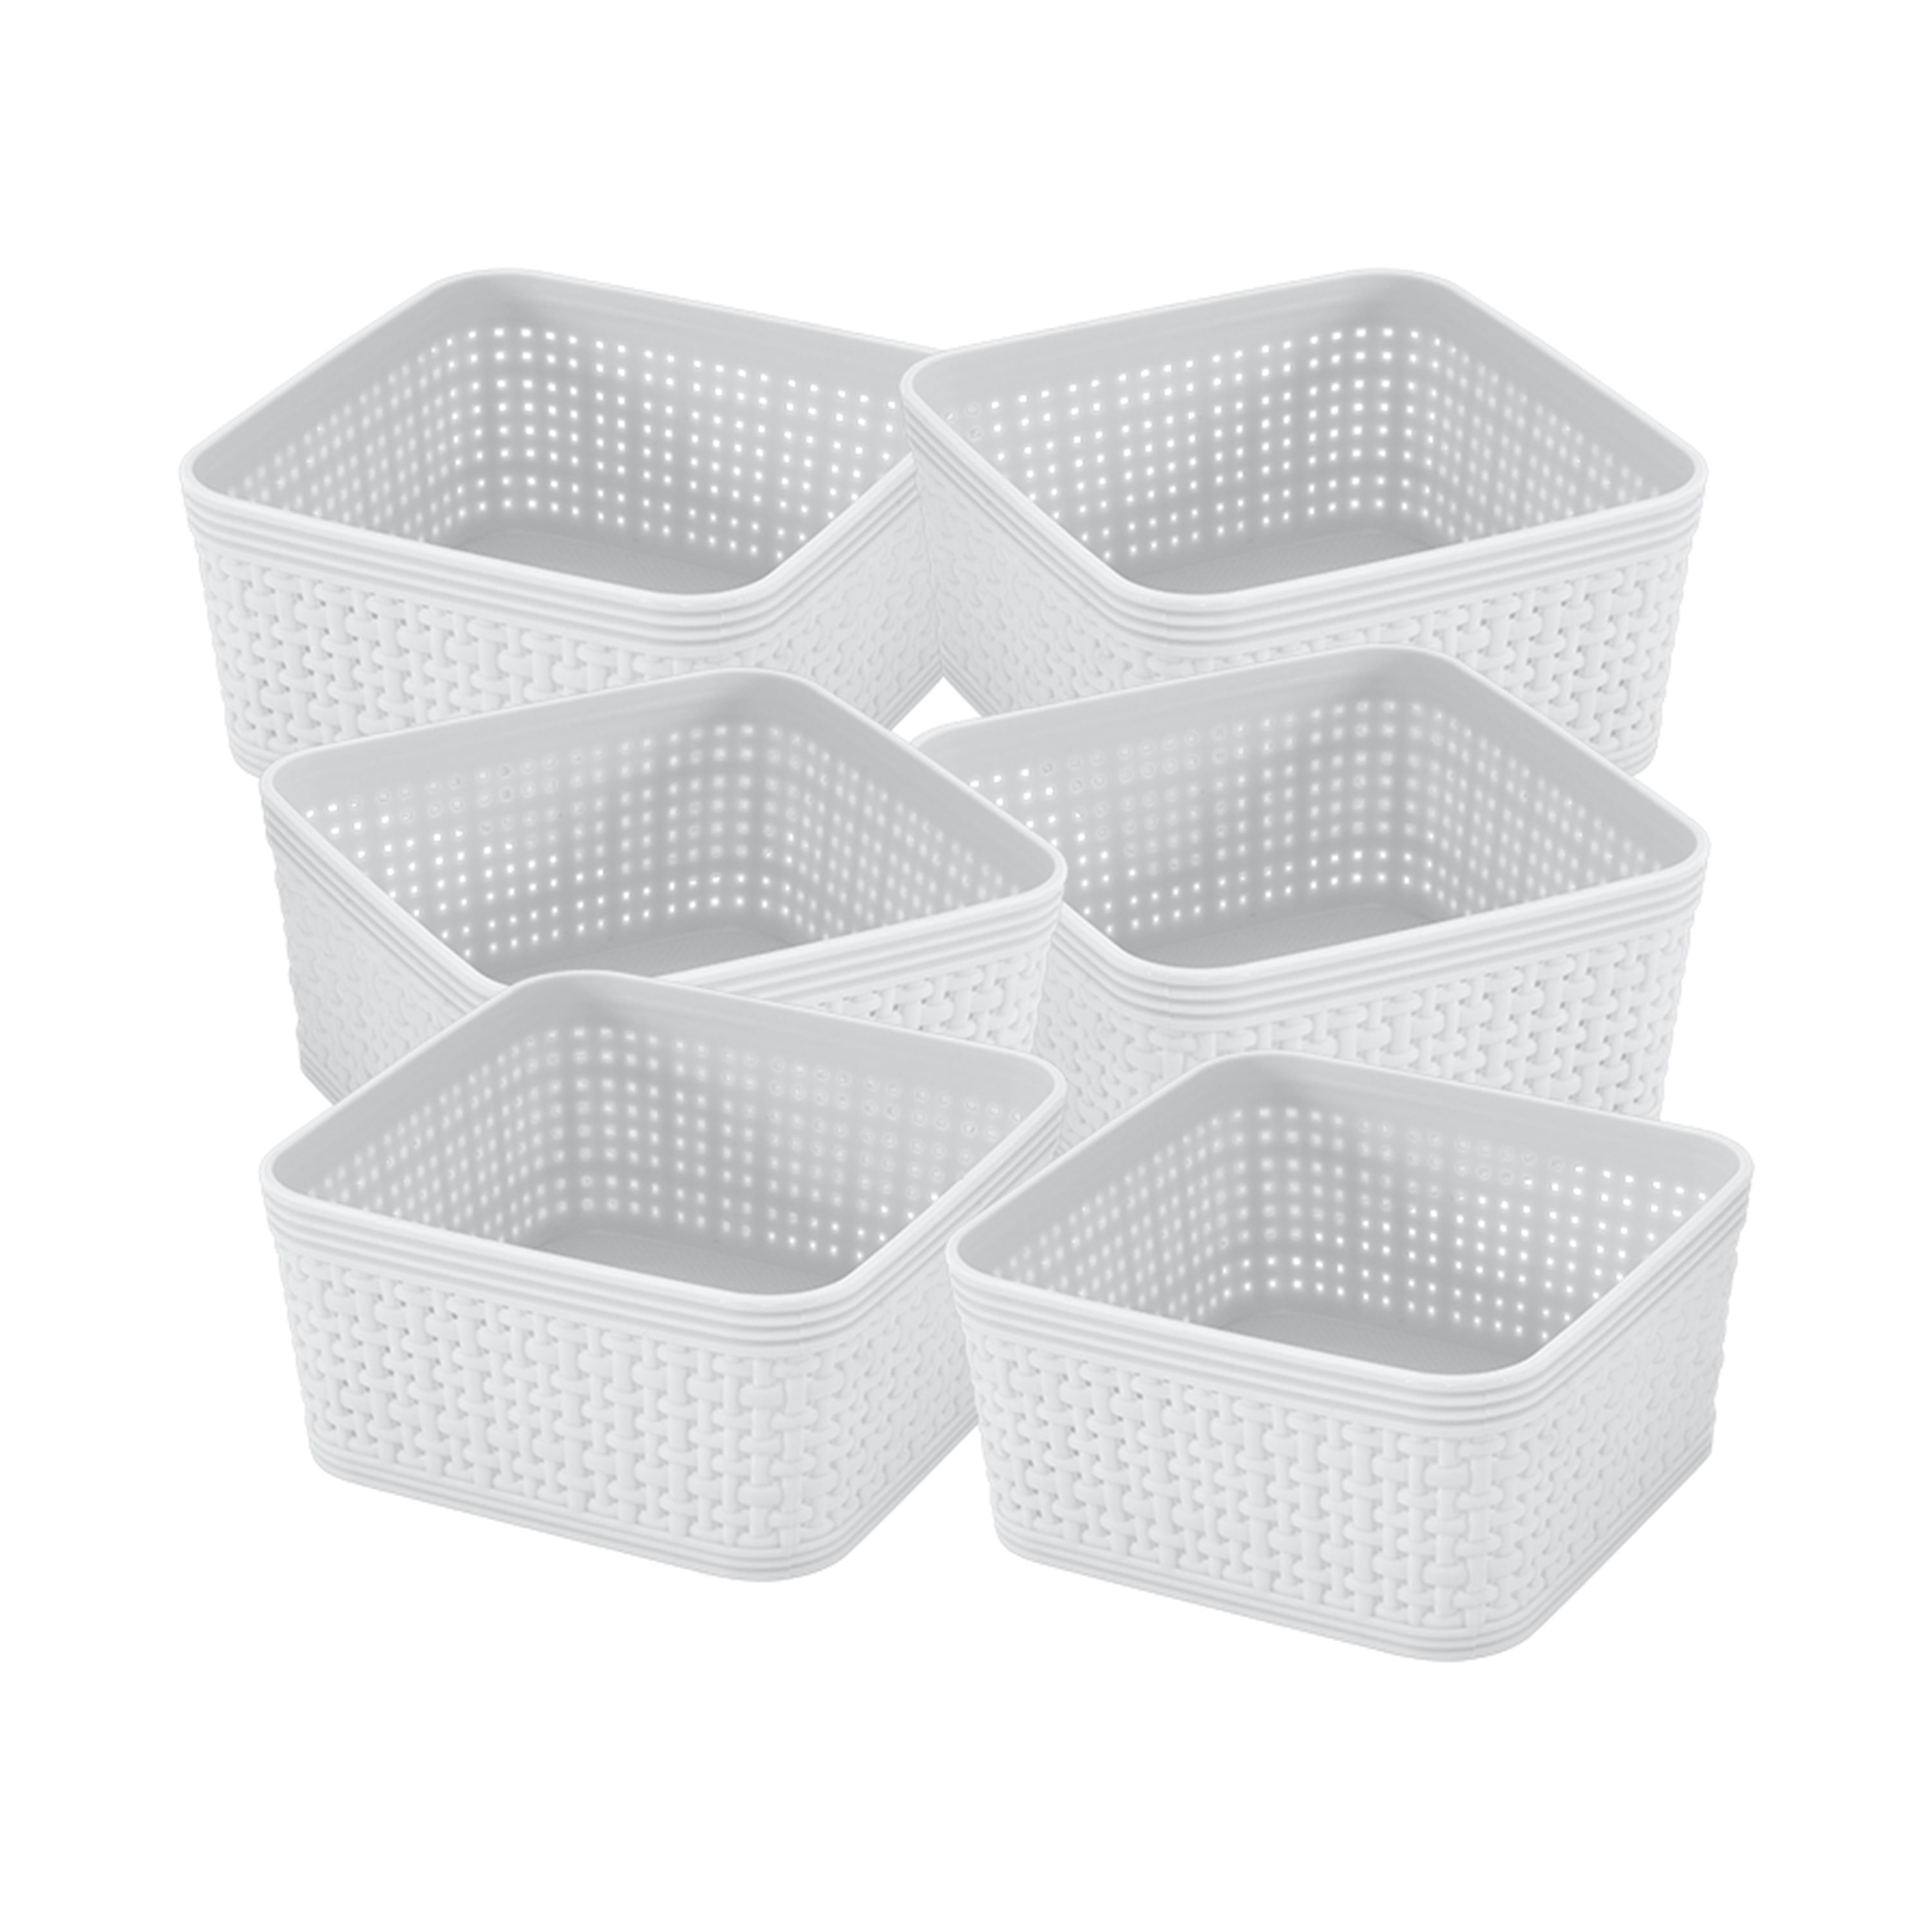 AnnkkyUS 6-Pack White Storage Plastic Baskets, Plastic Weave Basket for Organizing